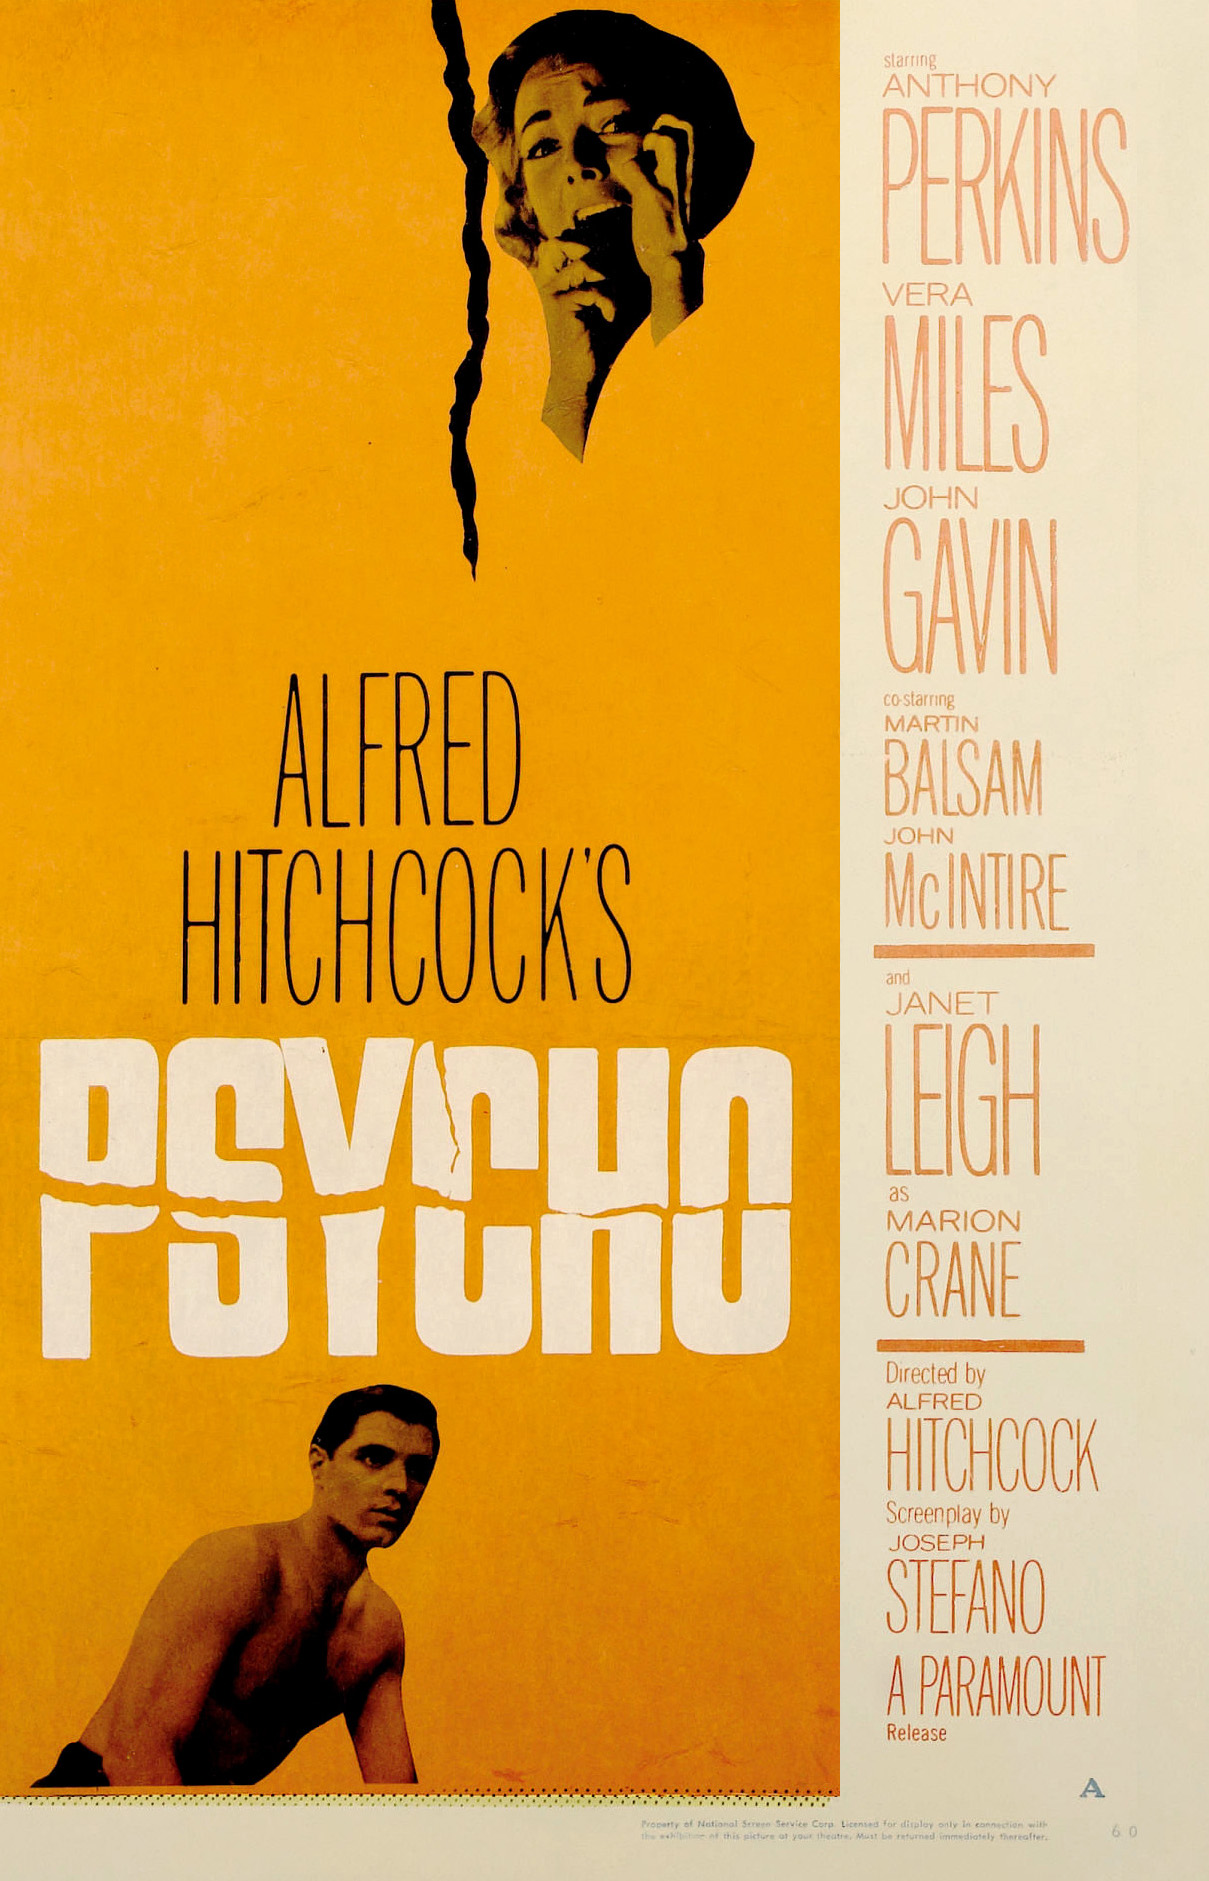 Psycho (1960) Backgrounds, Compatible - PC, Mobile, Gadgets| 1209x1881 px